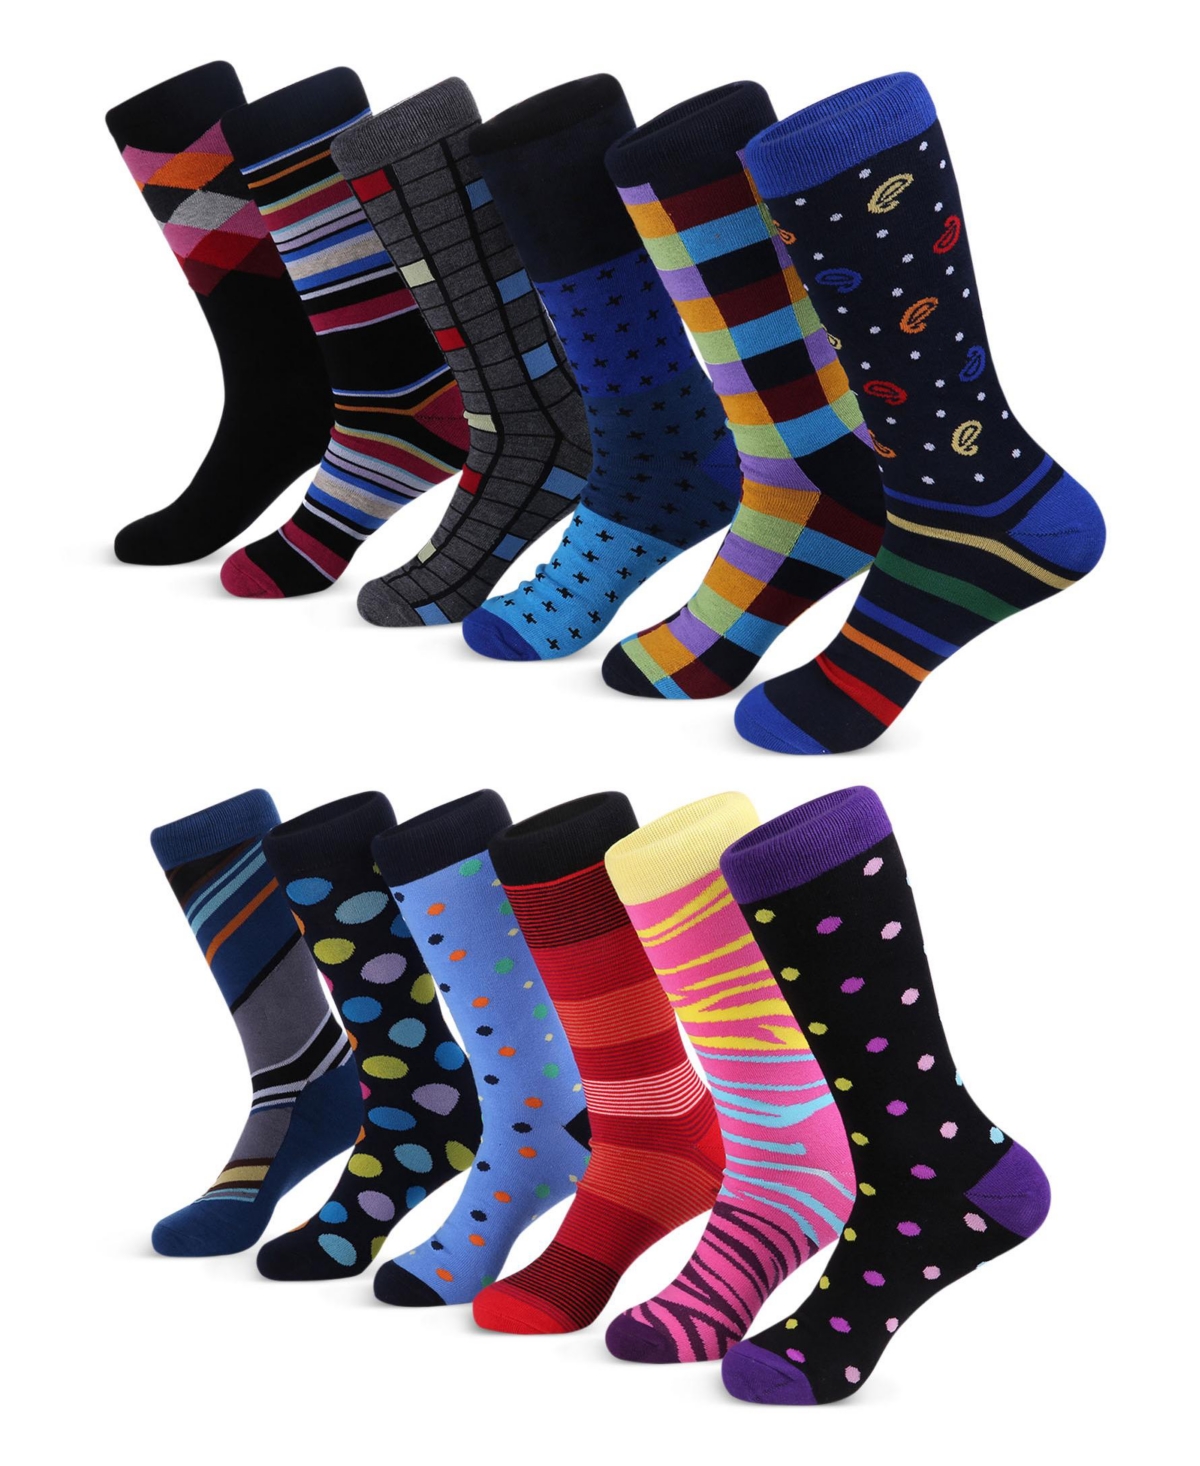 Men's Savvy Sharp Fun Dress Socks 12 Pack - Cool colors